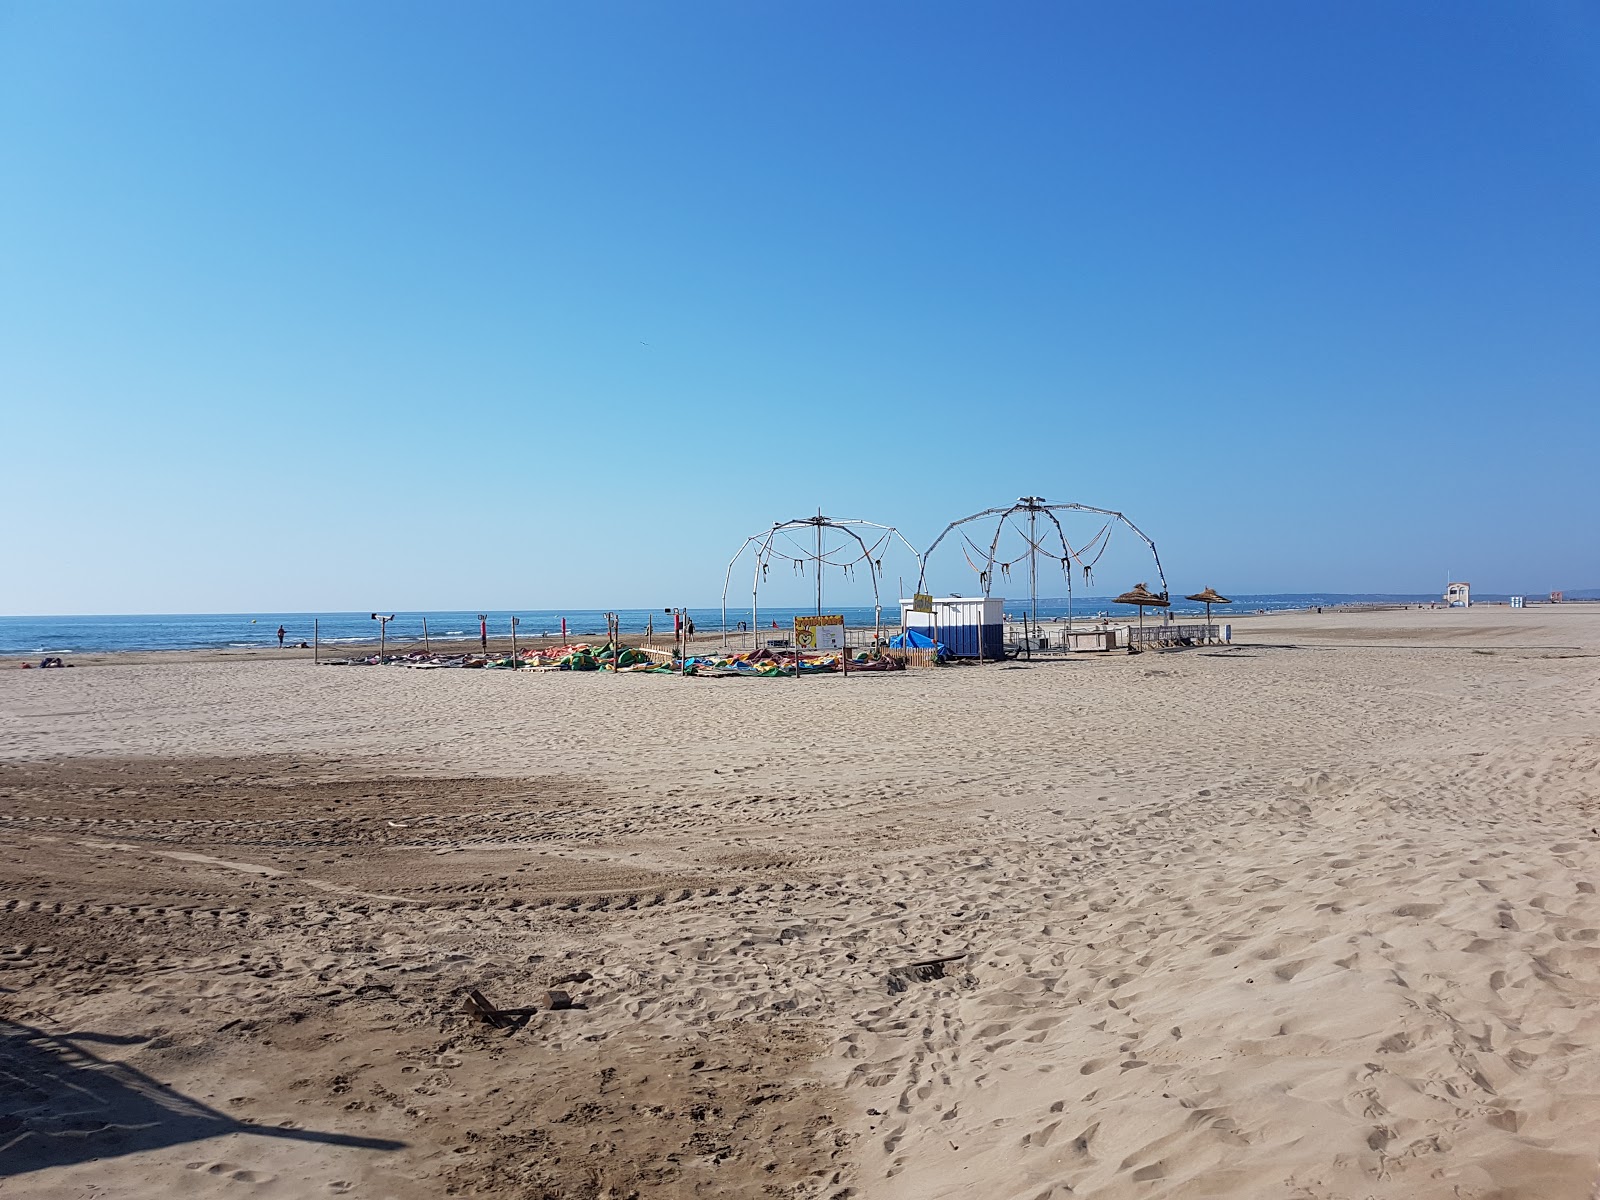 Foto de Les Montilles beach com alto nível de limpeza